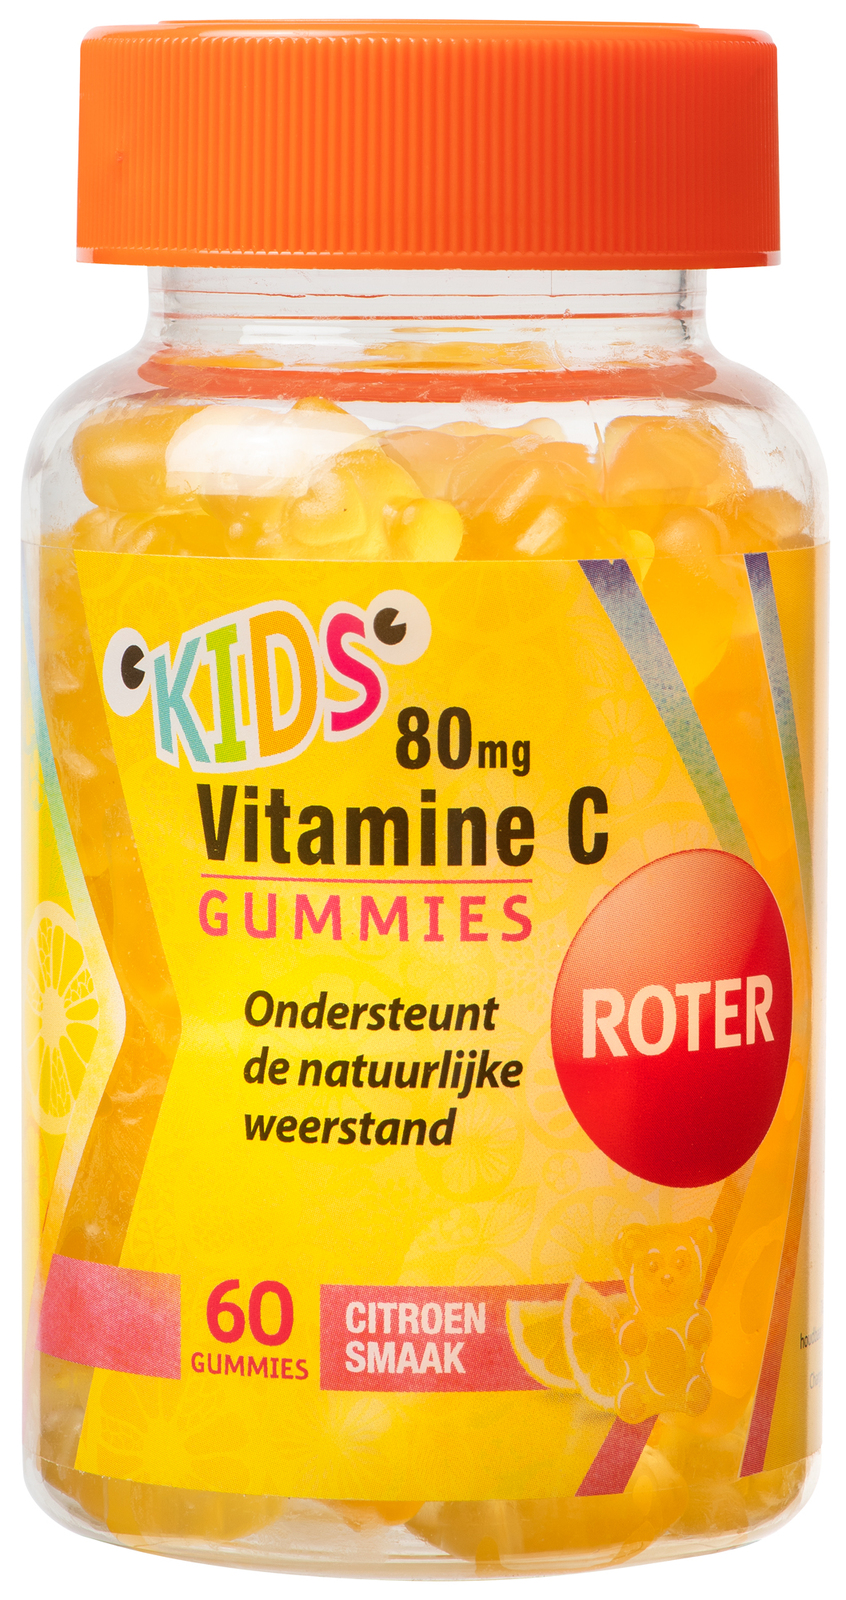 Roter 80mg Vitamine C Gummies Kids